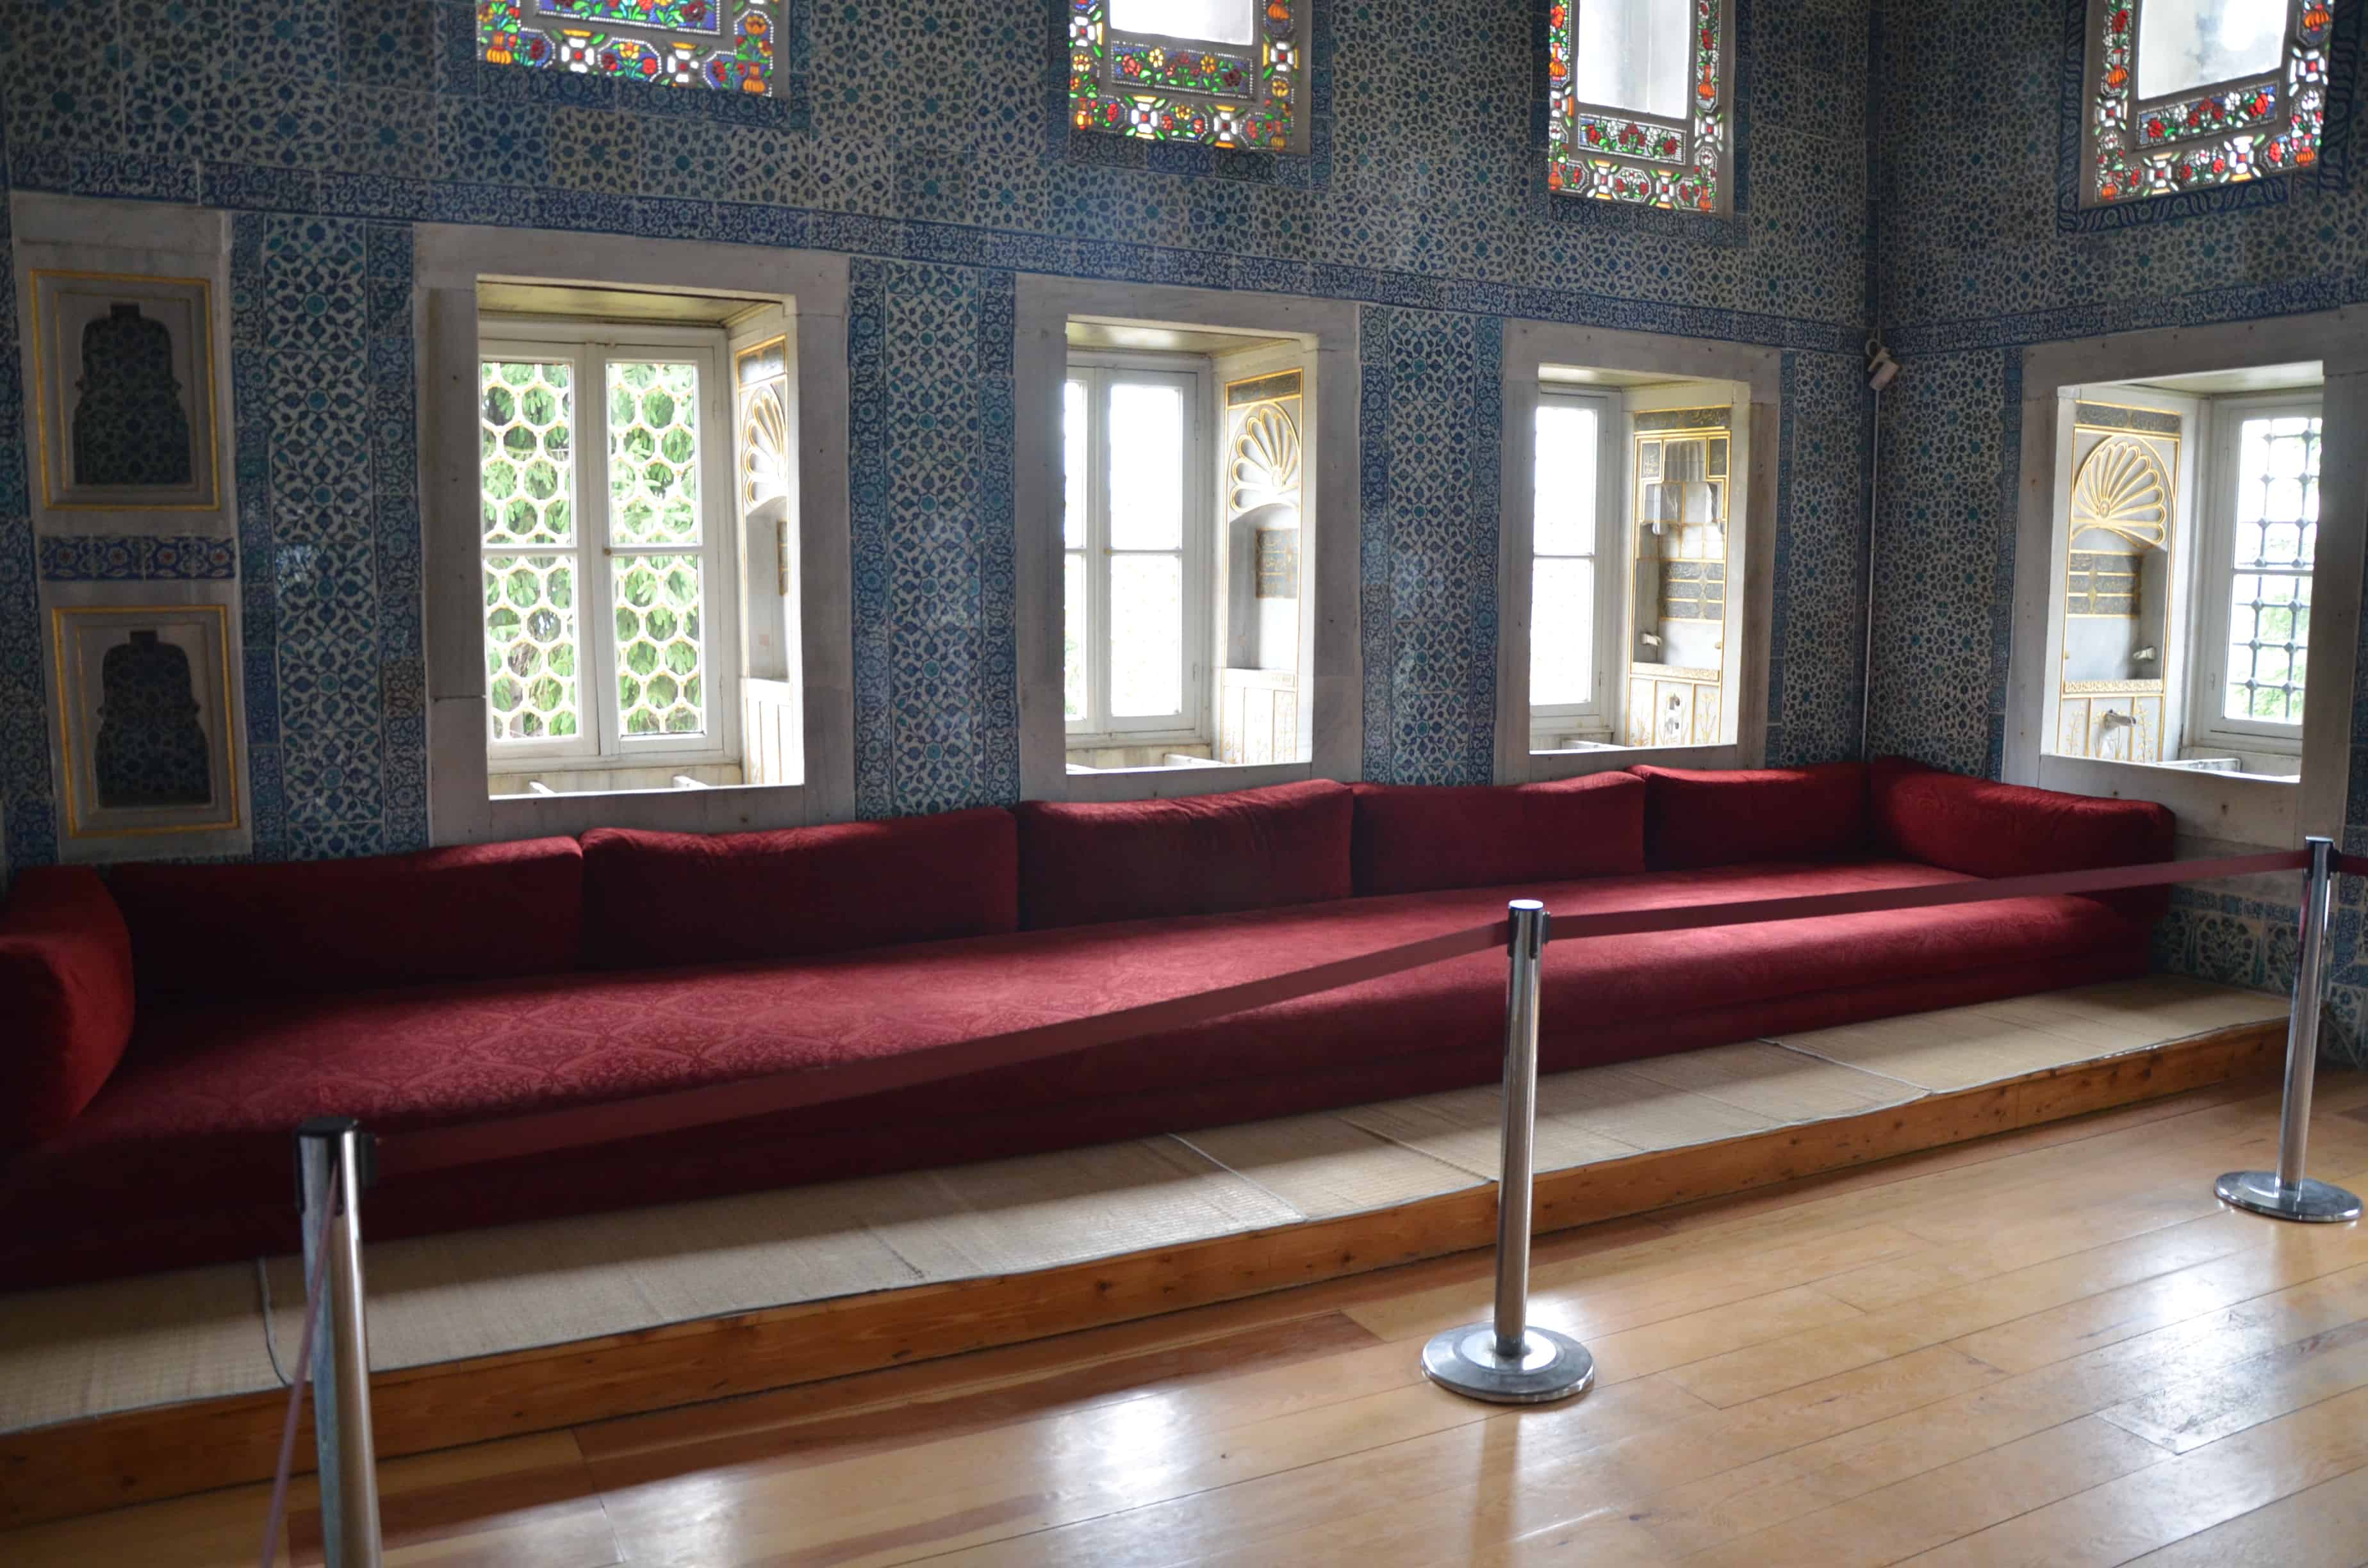 Circumcision Room at Topkapi Palace in Istanbul, Turkey